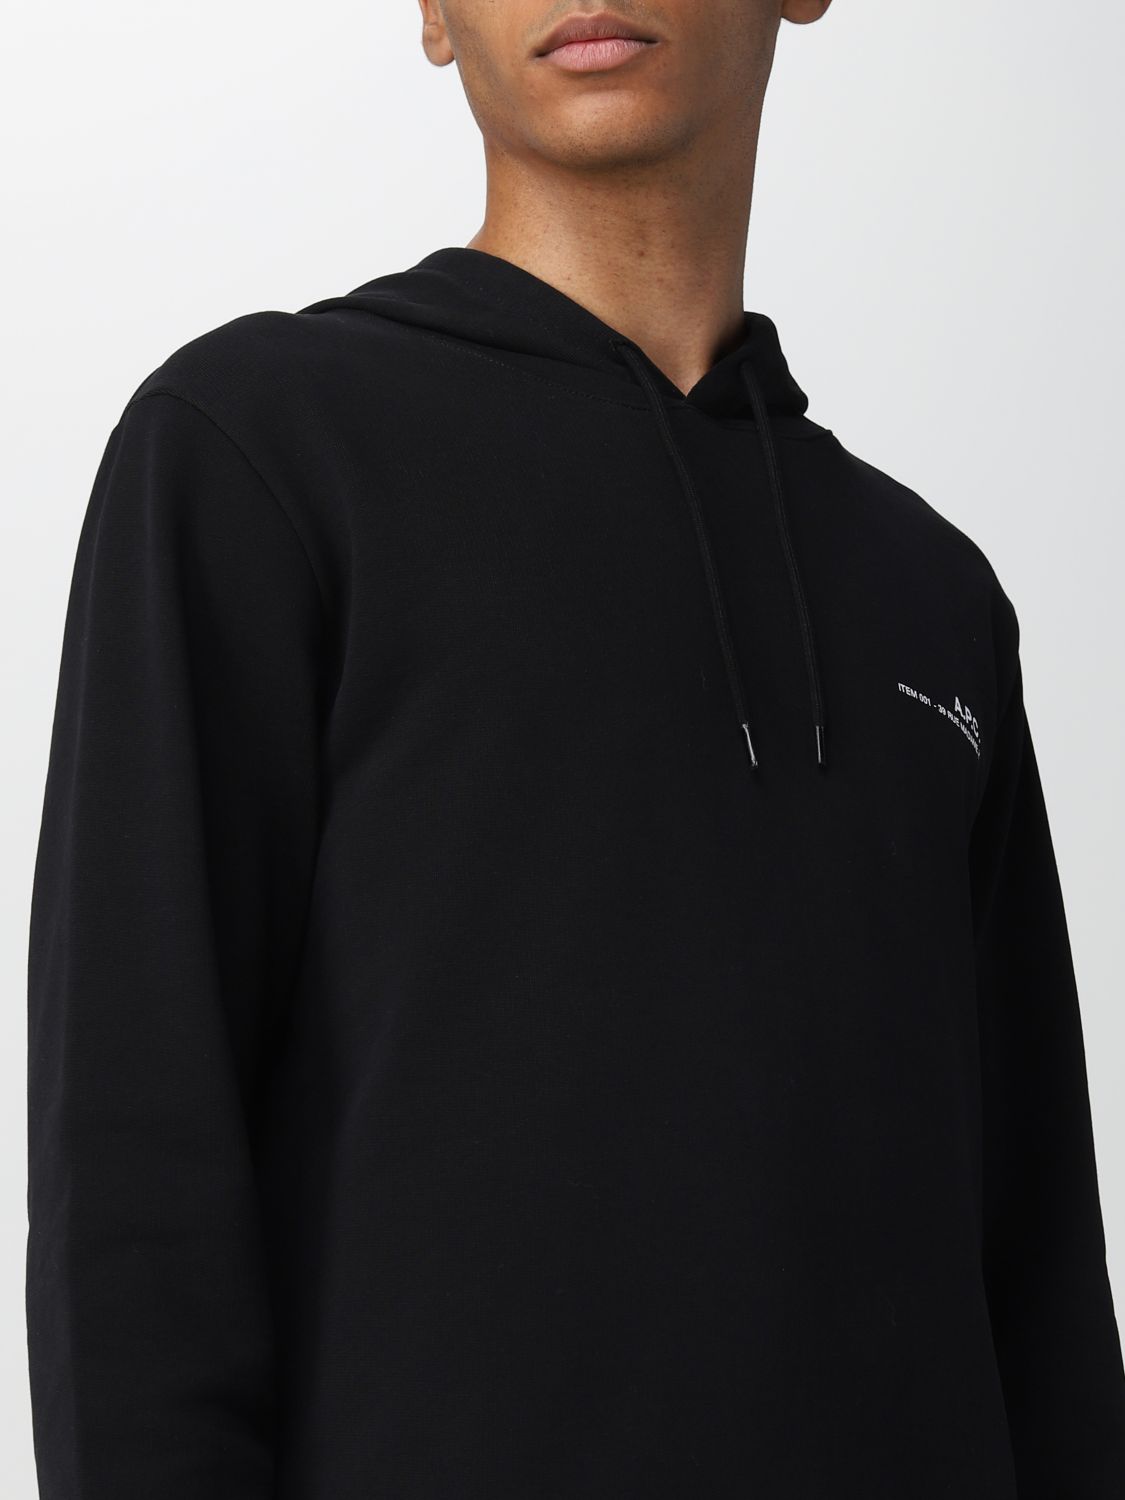 Sweatshirt A.p.c.: A.p.c. sweatshirt for men black 4